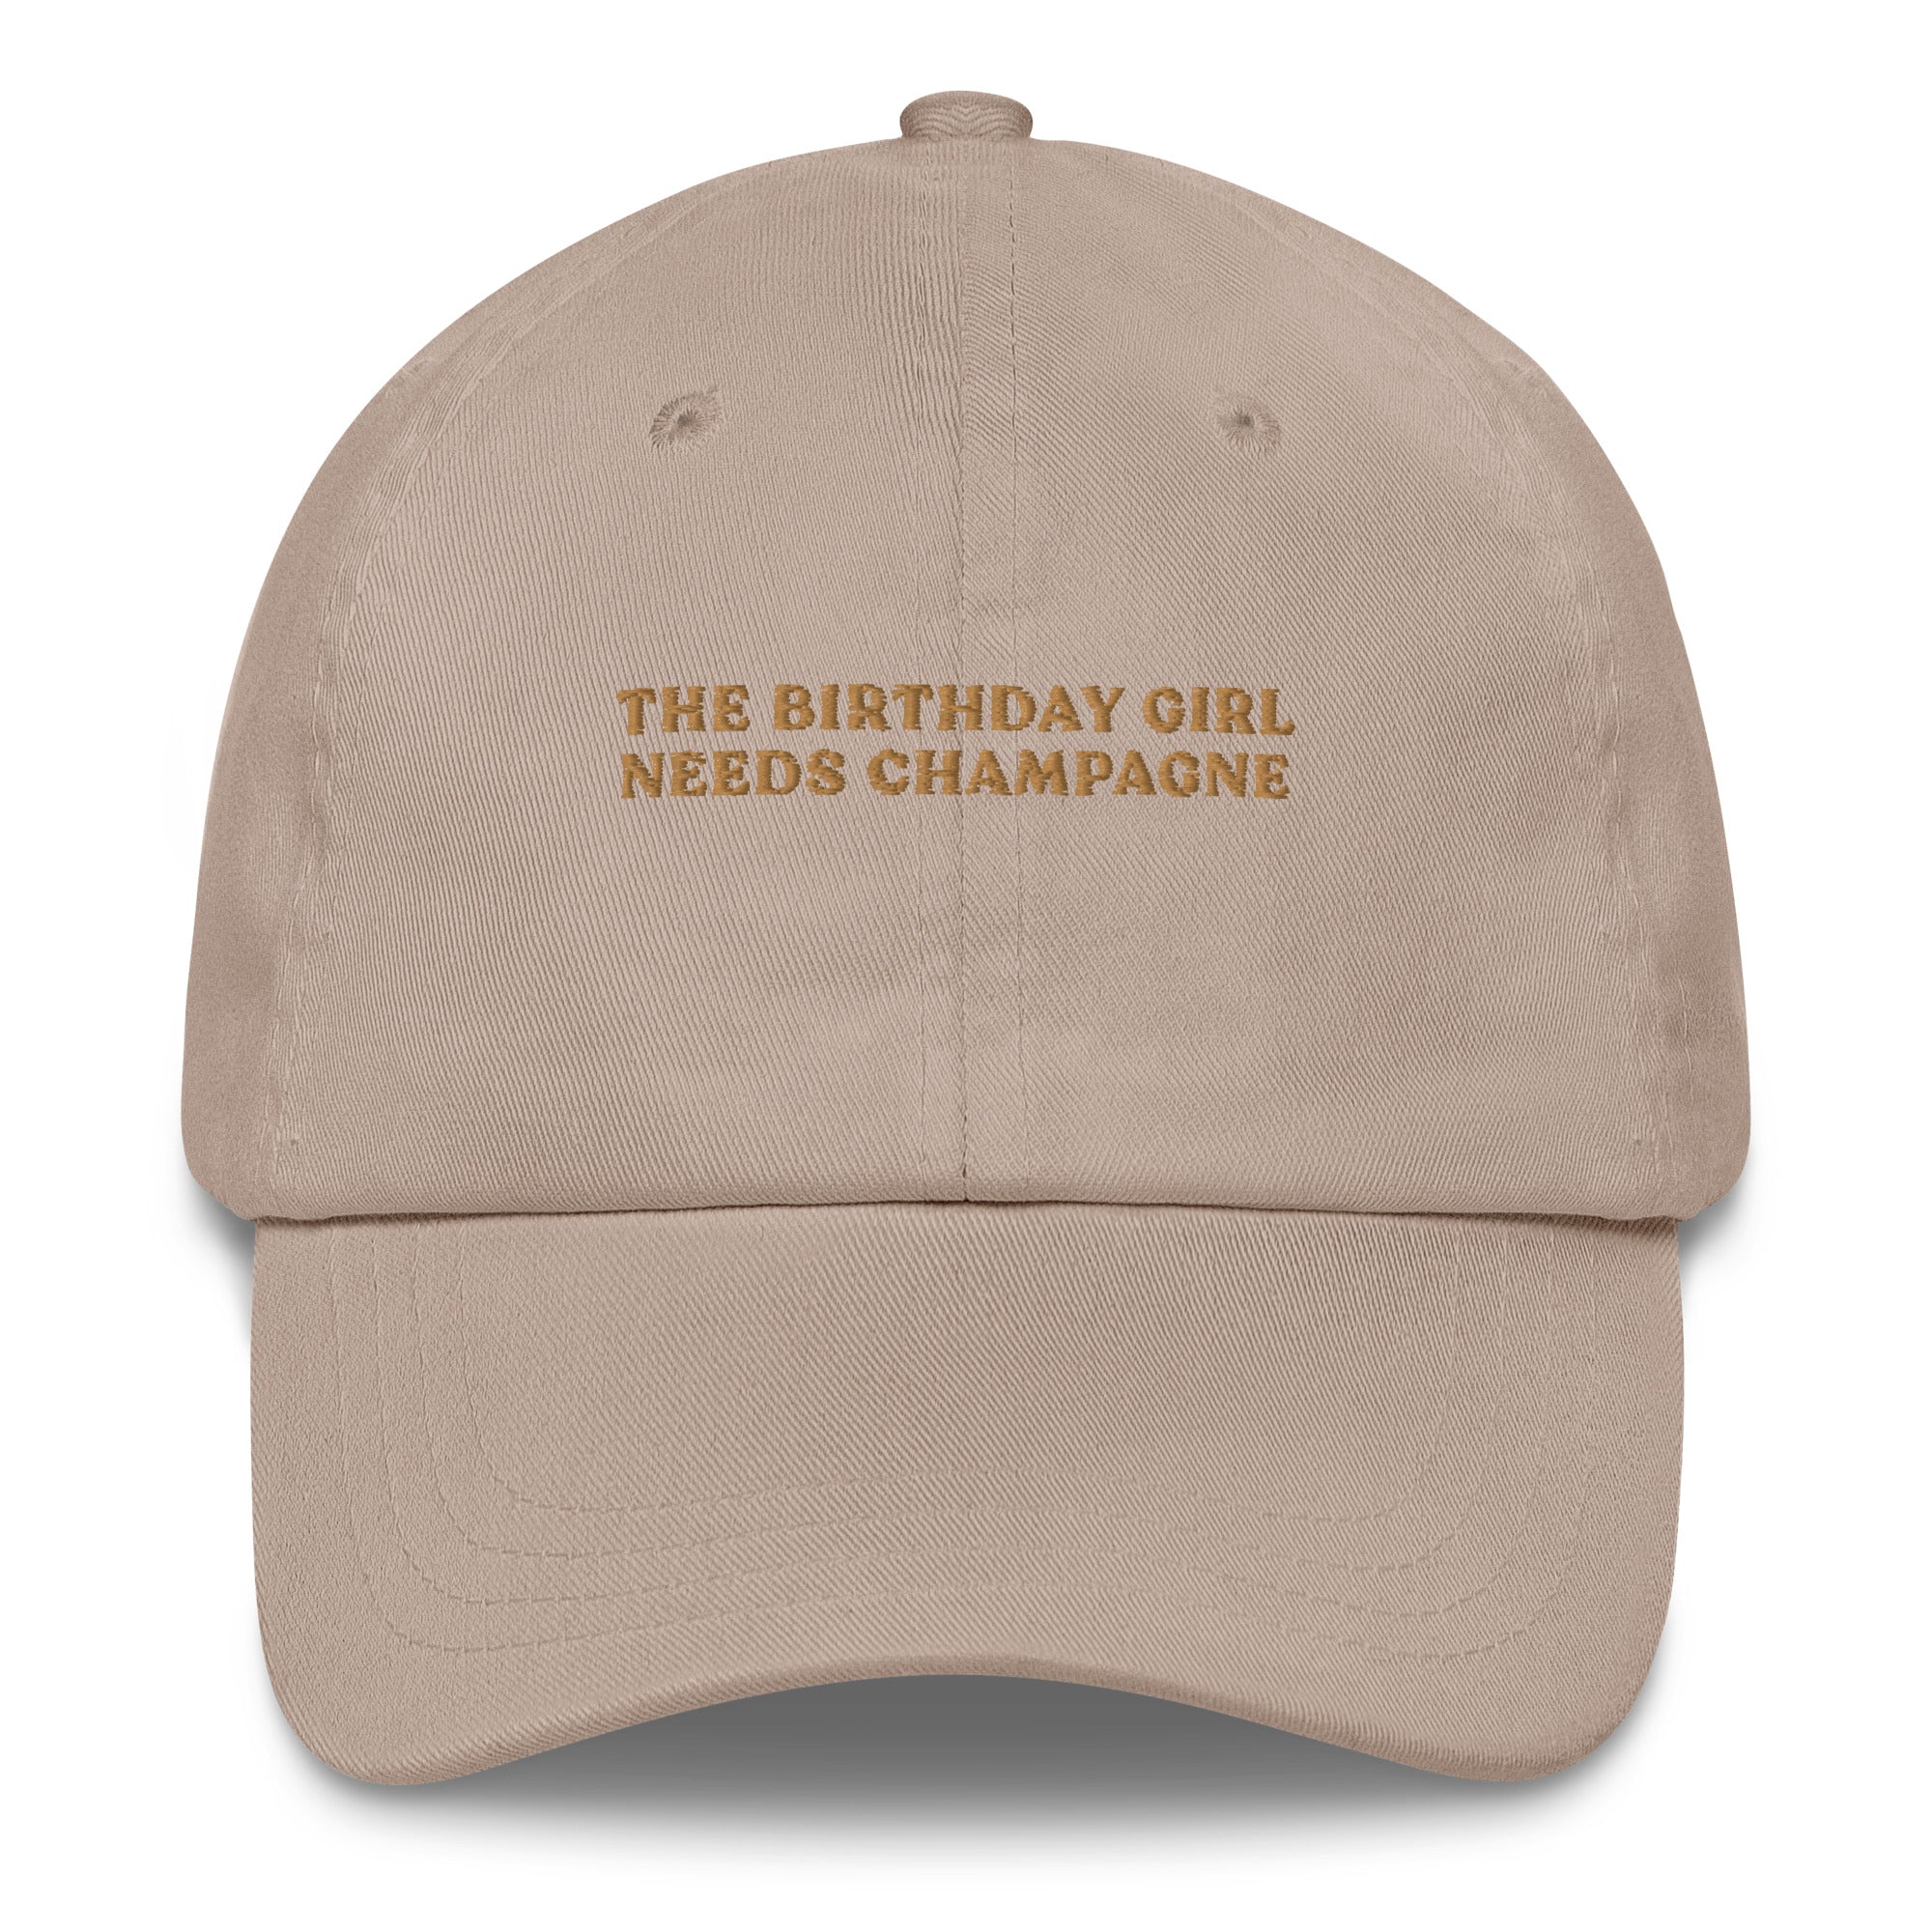 The Birthday Girl needs Champagne - Cap